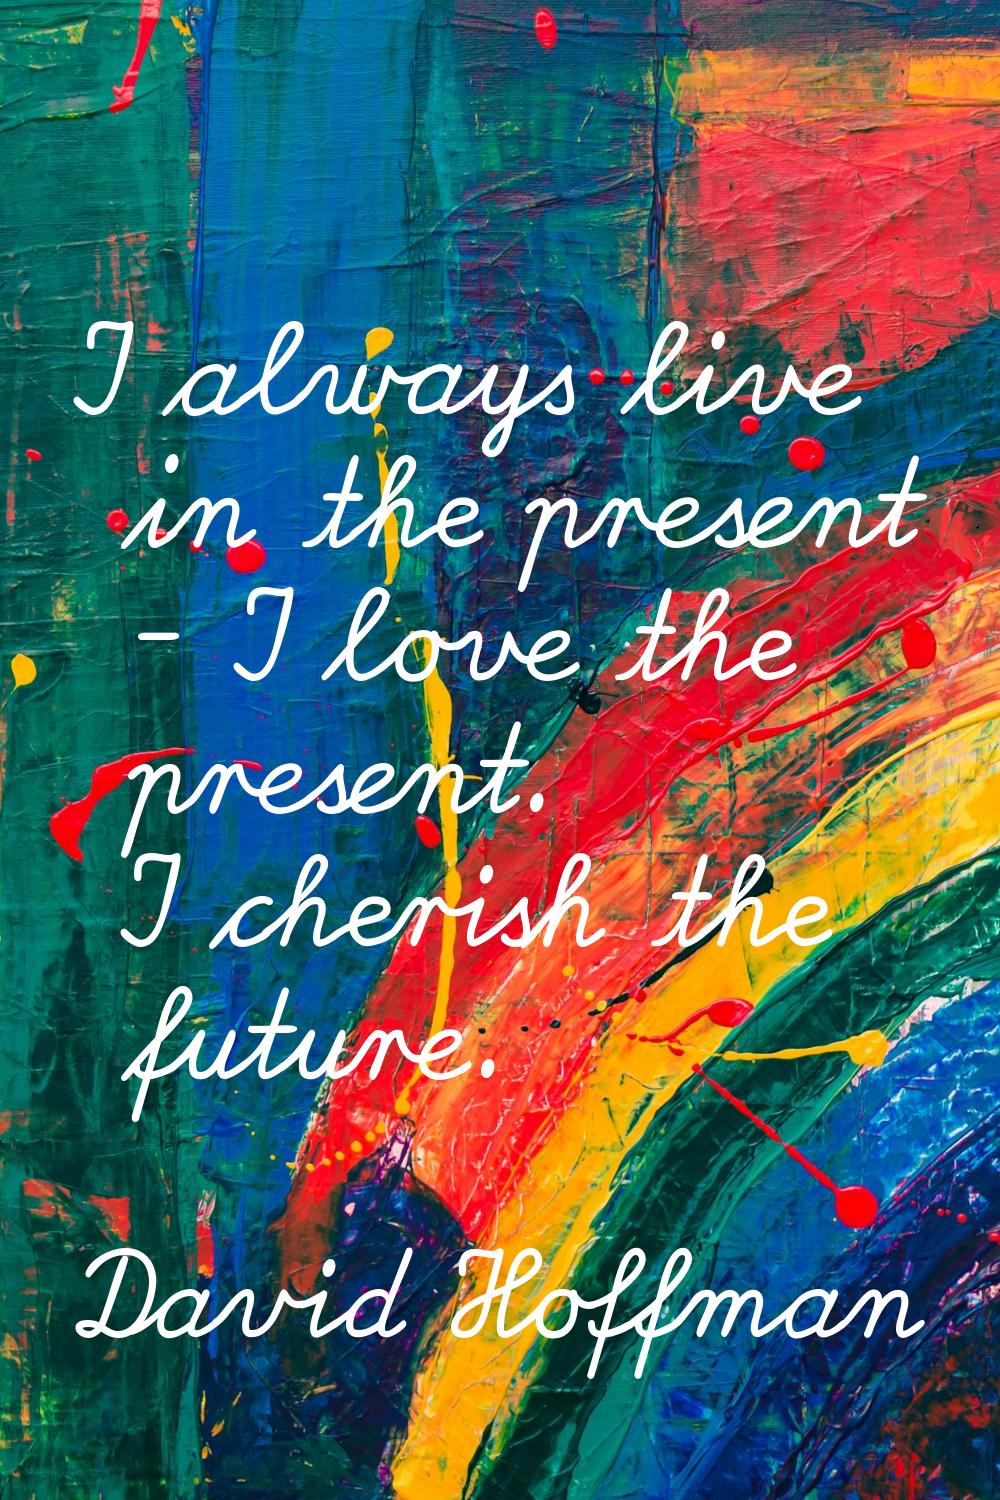 I always live in the present - I love the present. I cherish the future.